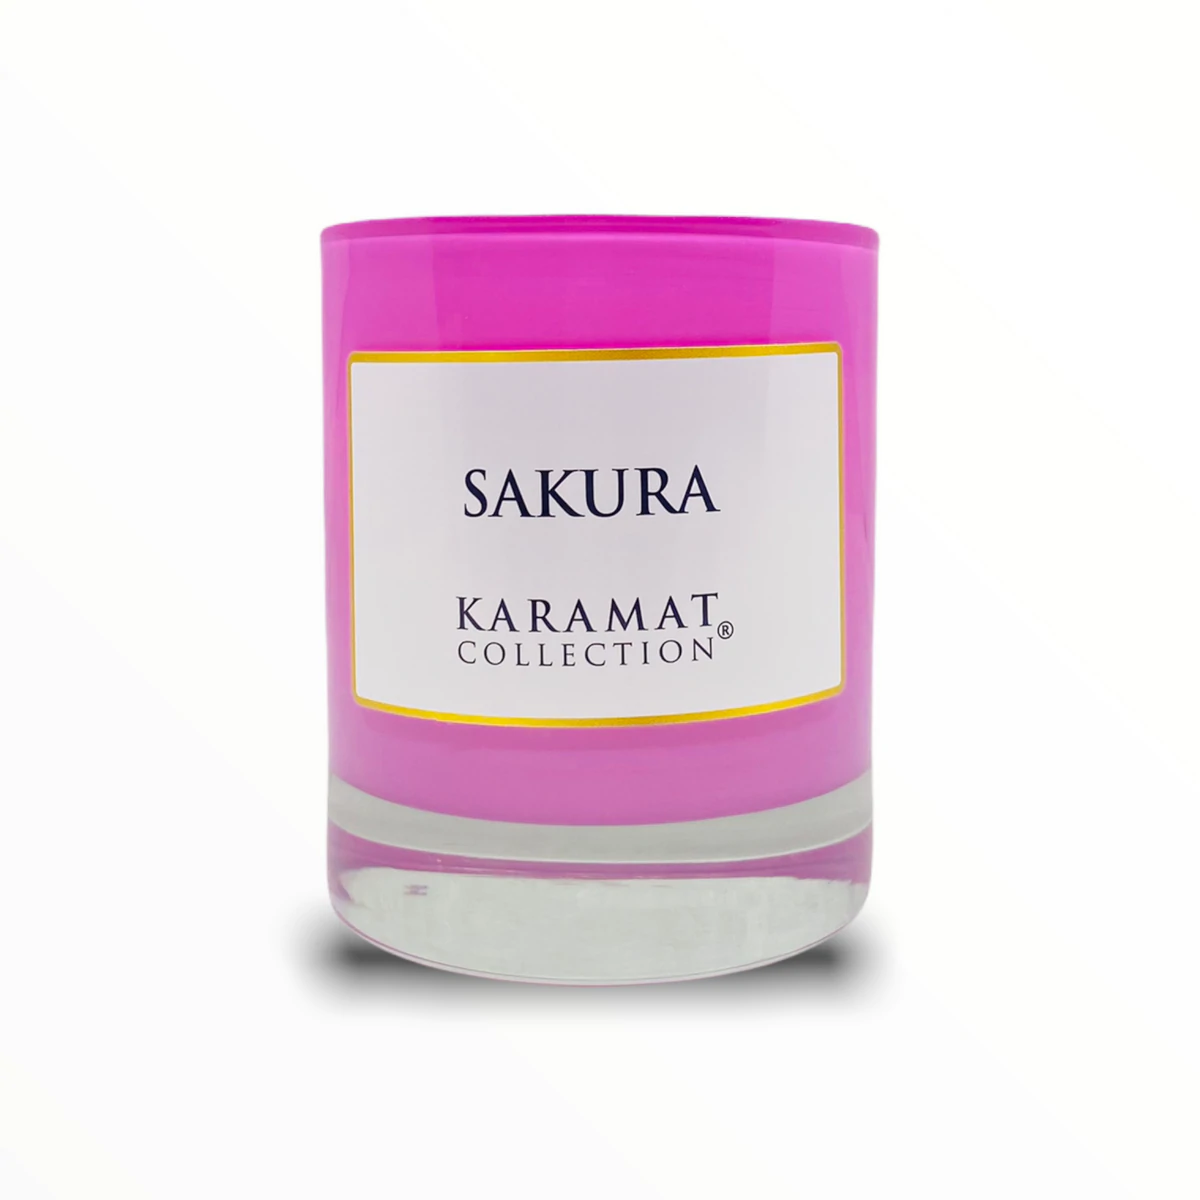 Sakura Scented Candle 40G By Karamat Collection